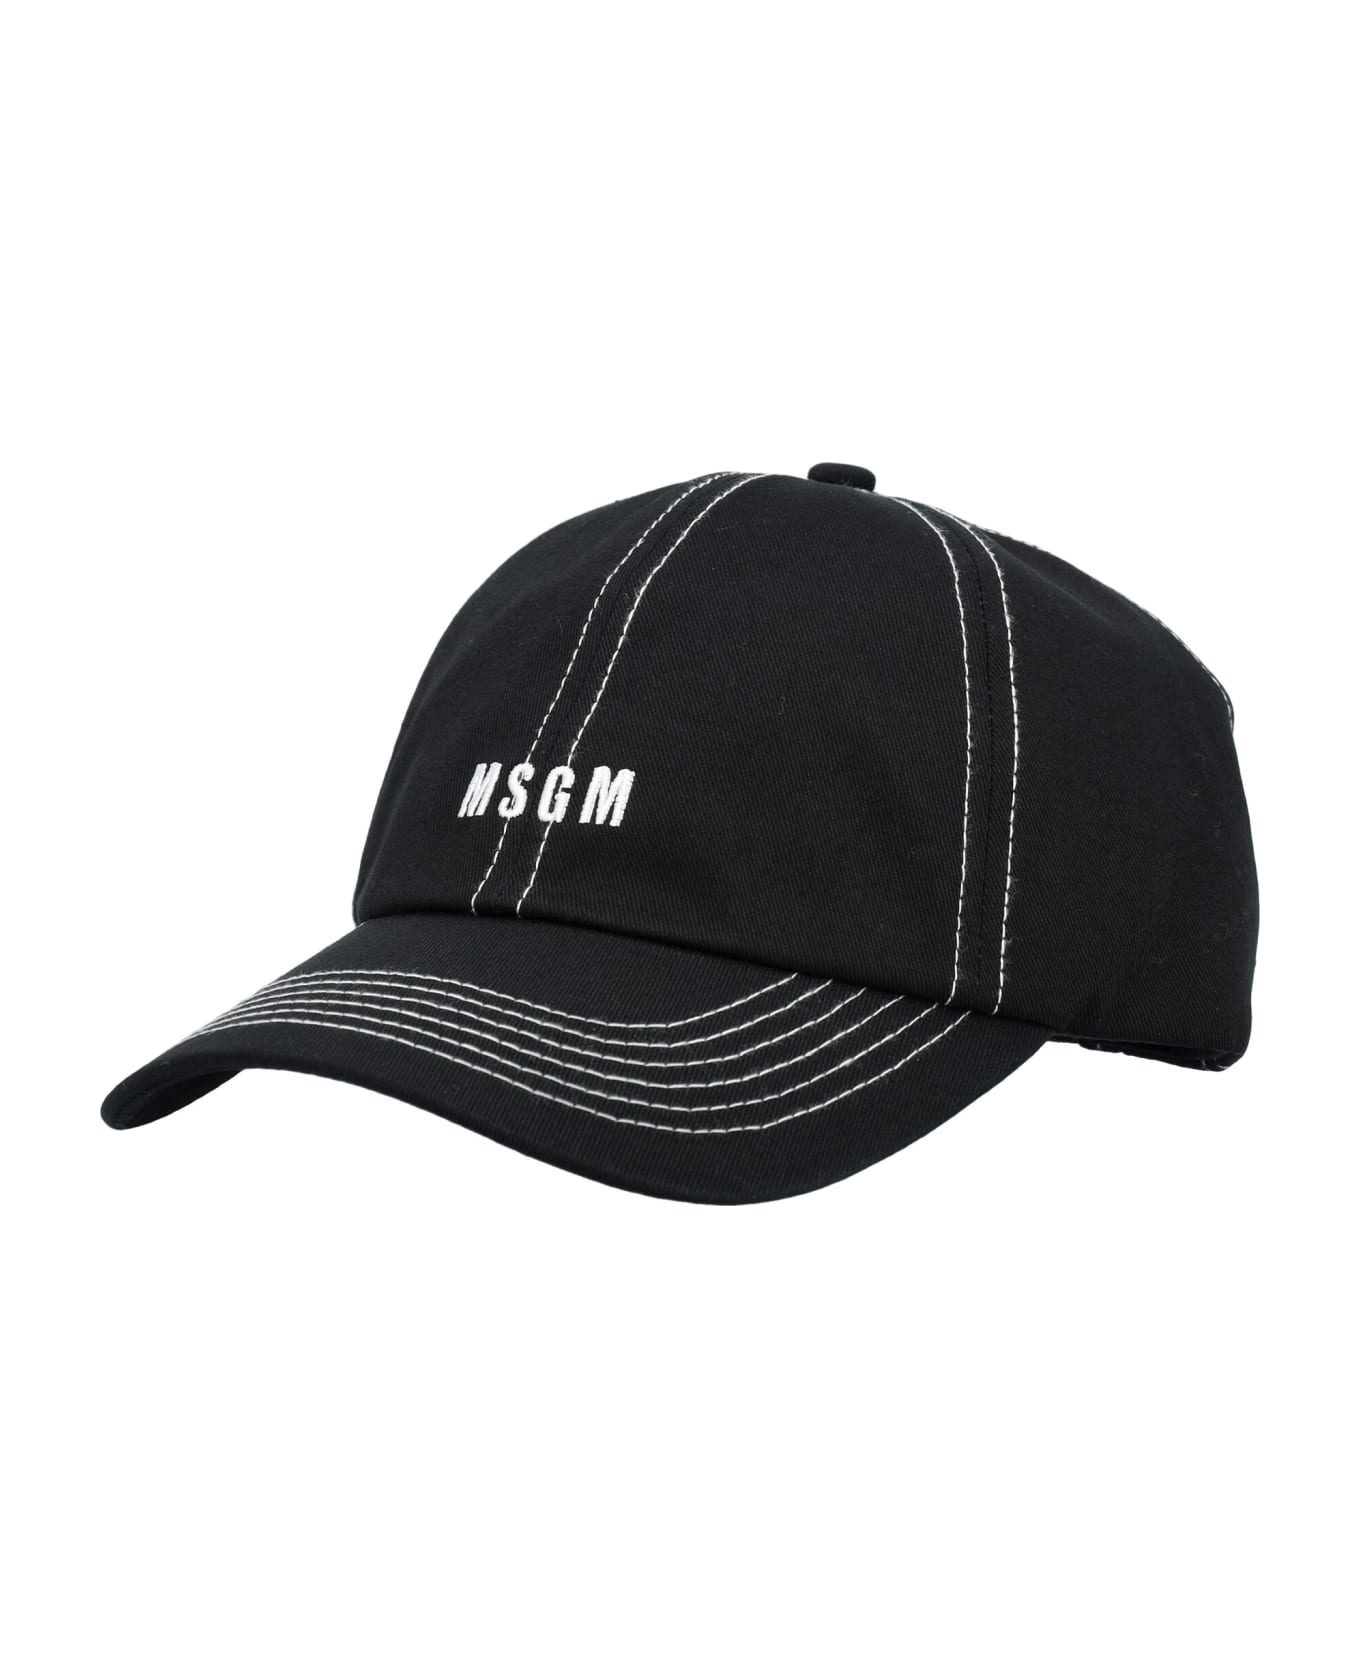 MSGM Logo Baseball Cap - NERO/BLACK